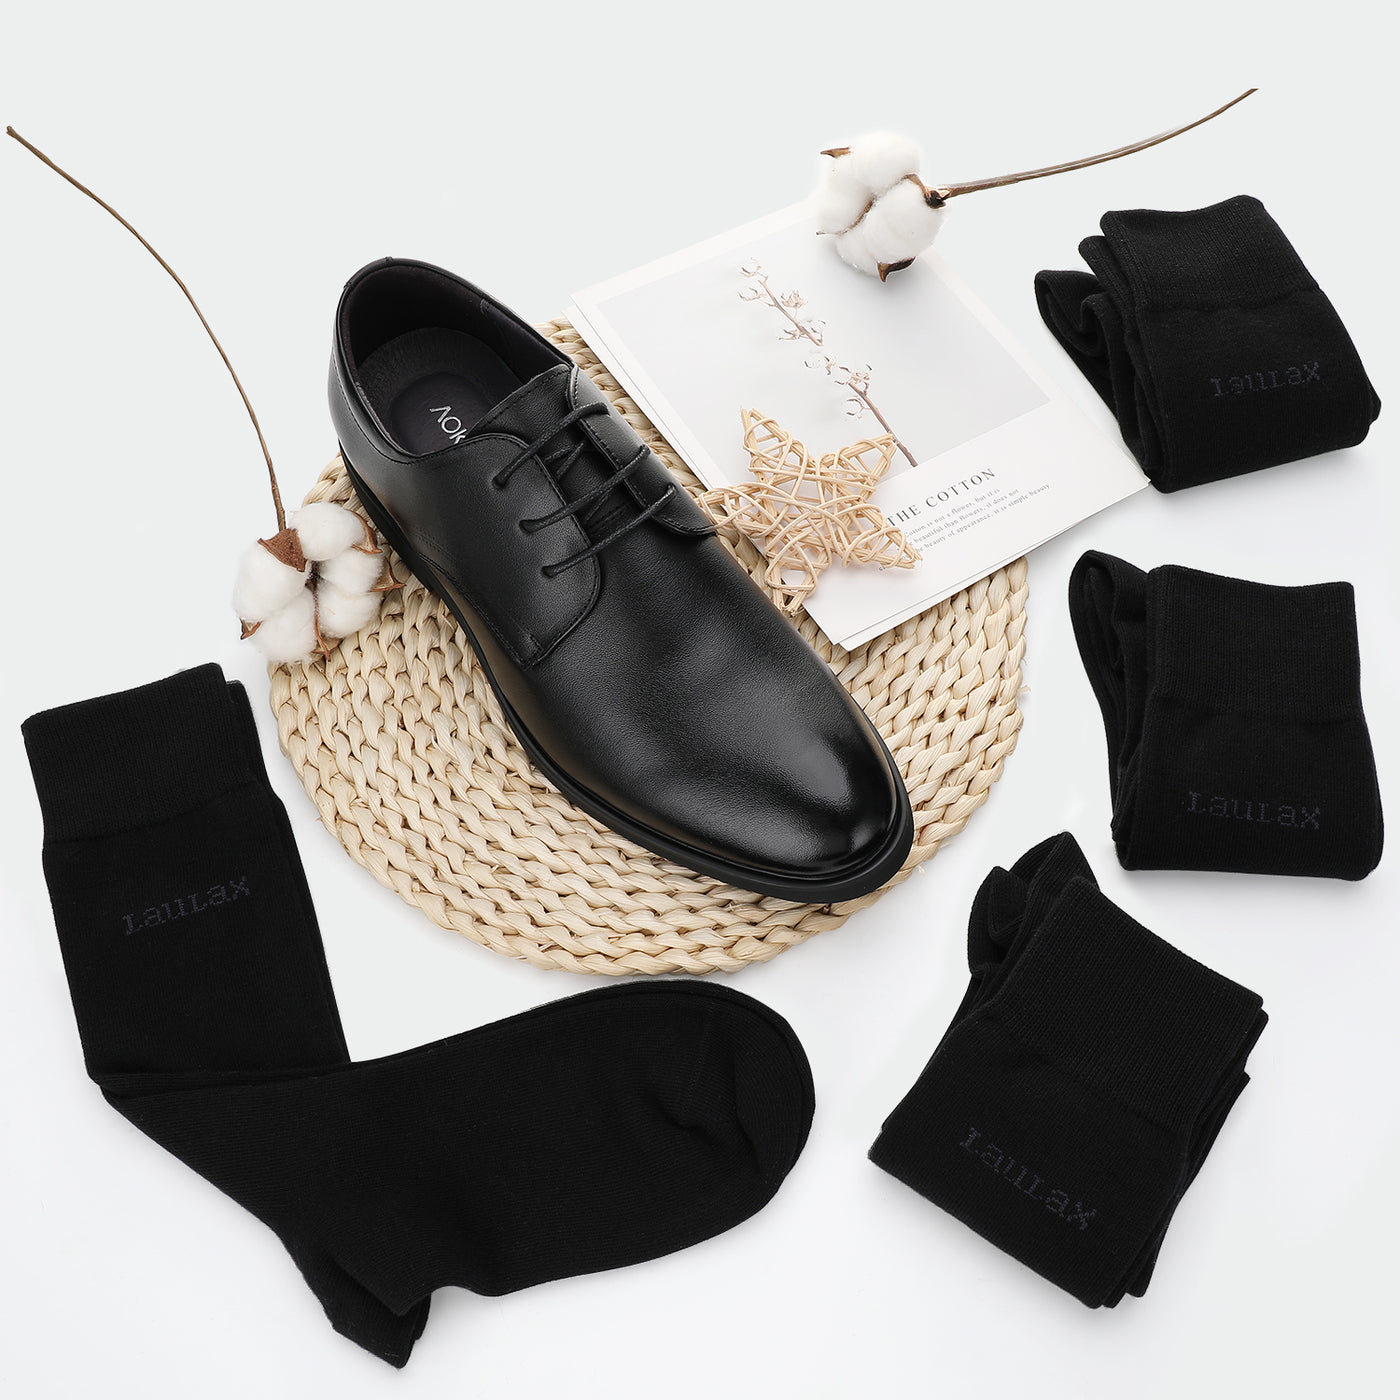 4 Pairs High Quality Finest Combed Cotton Dress Socks, Black, Gift Set wish Socks wash bag